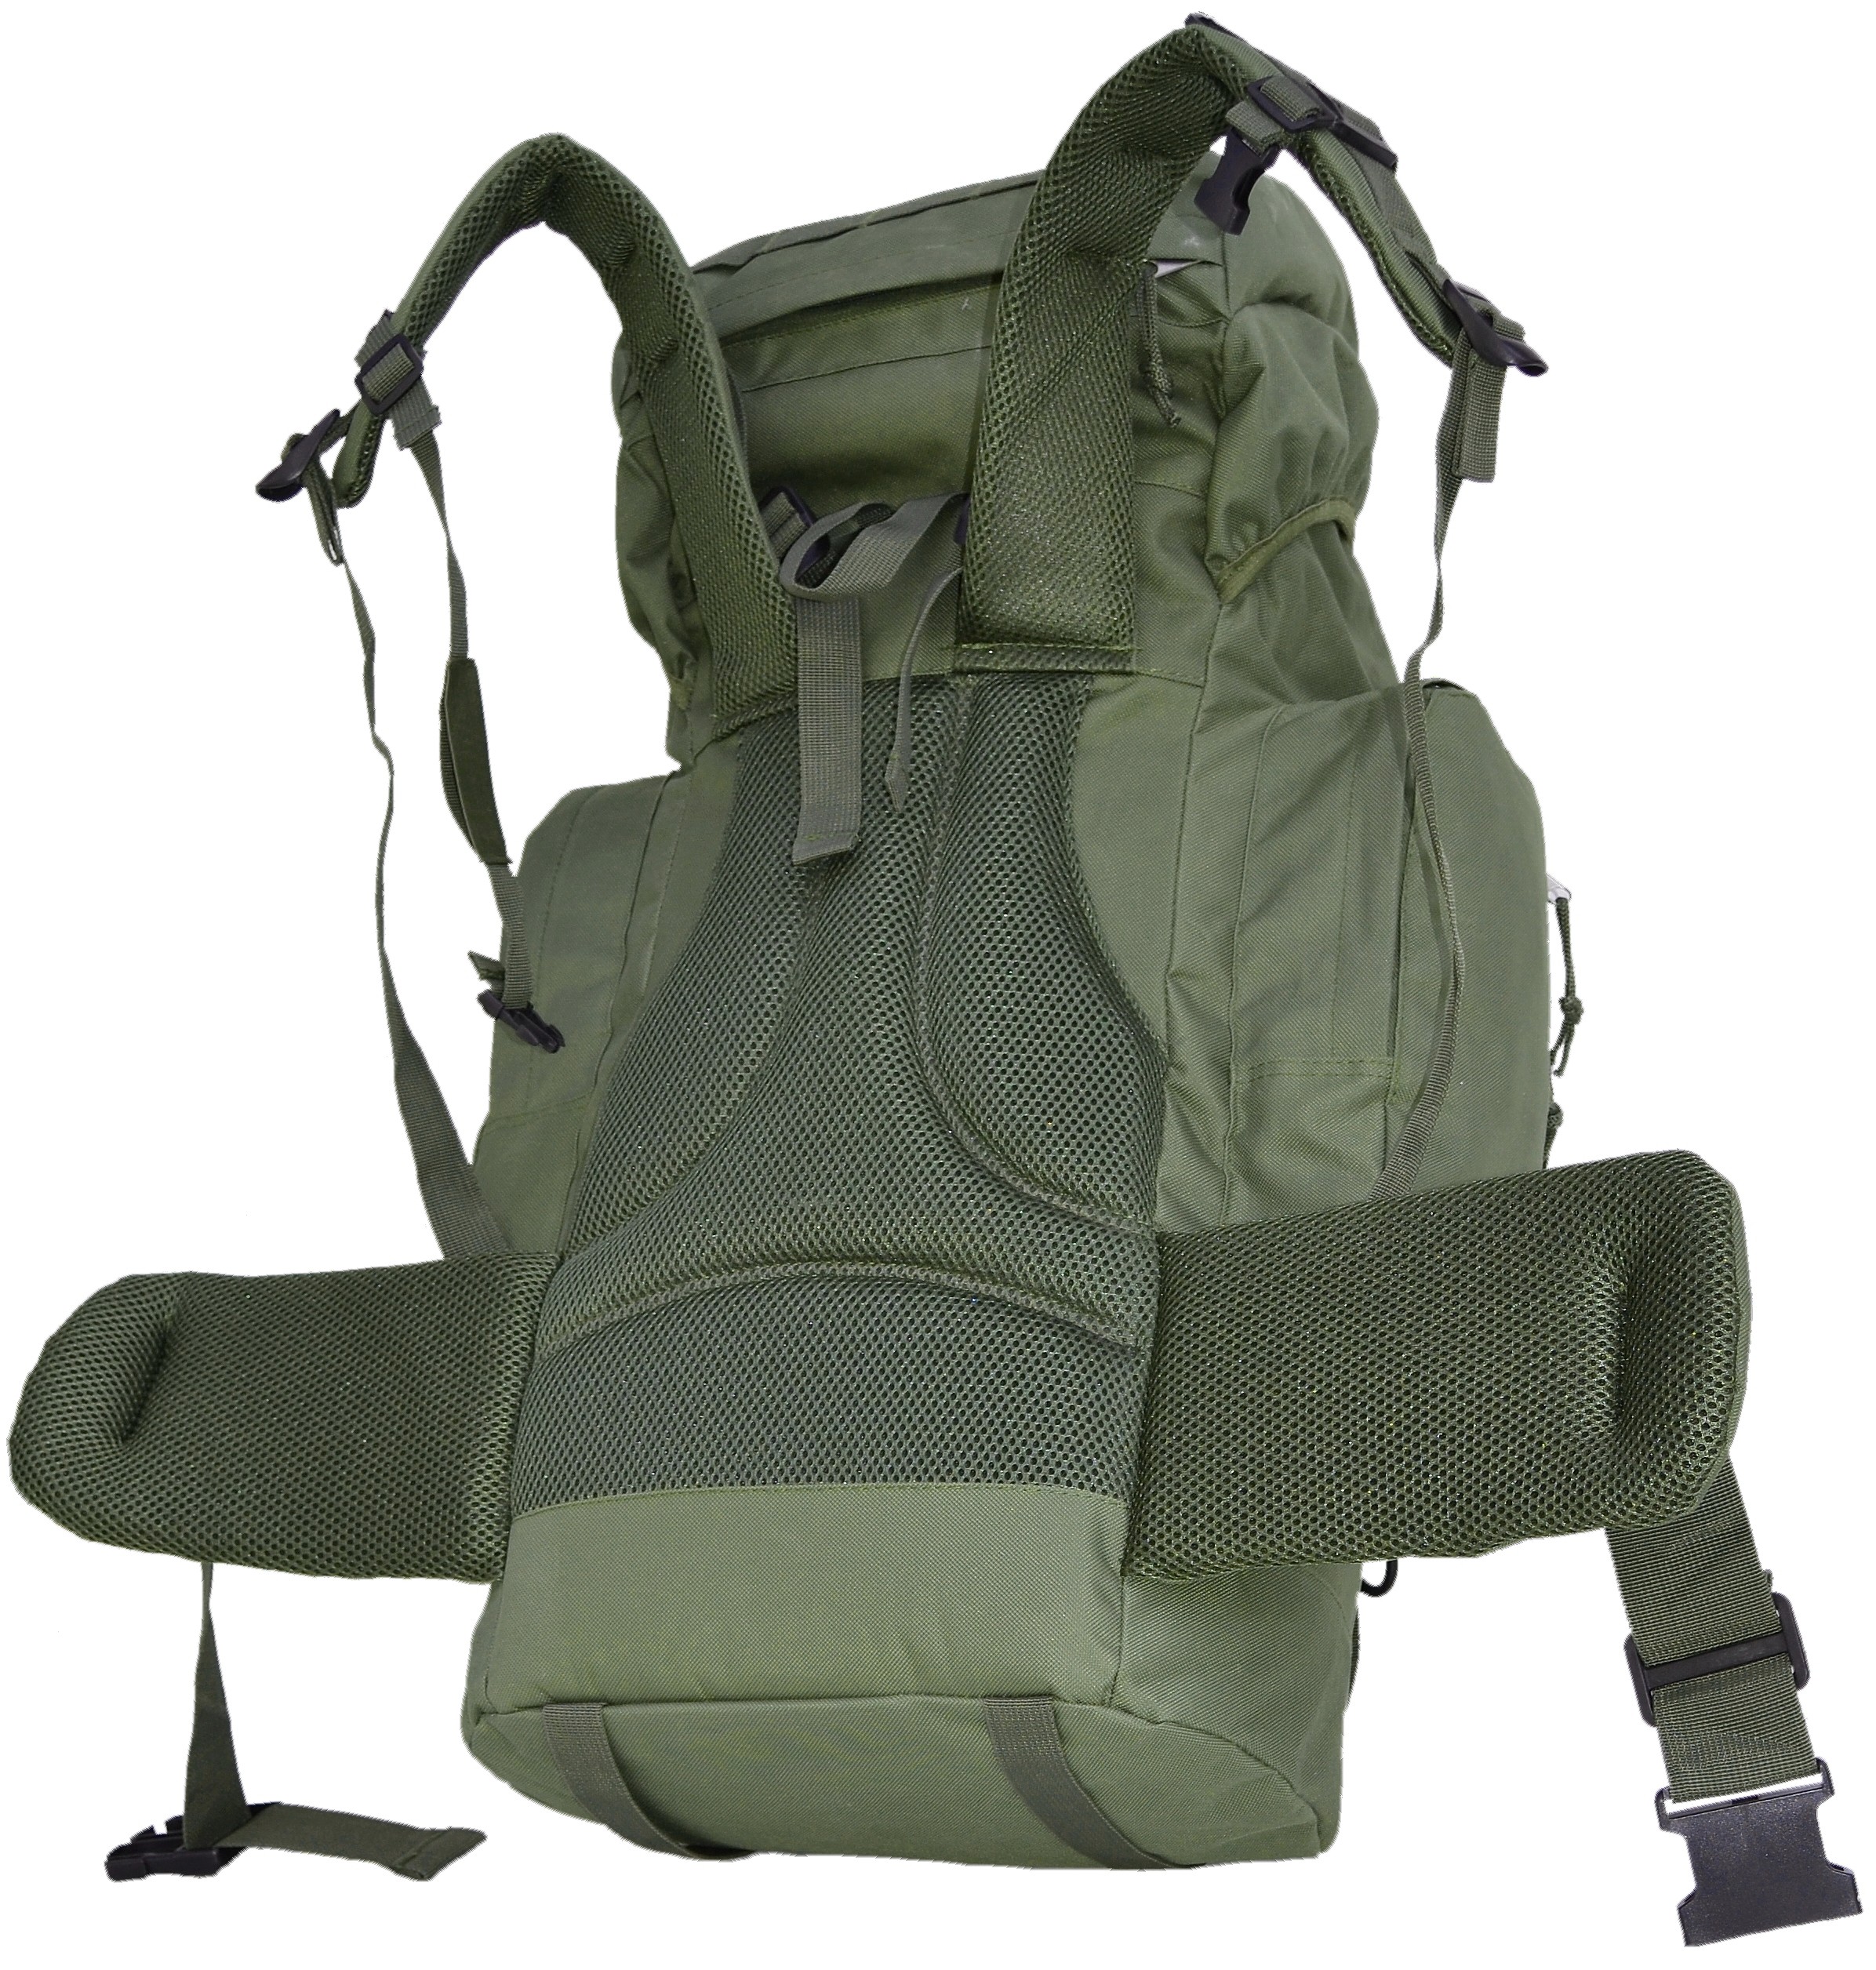 Am20 ACU, Tan, OD, BK, MC MD Explorer Giant Tactical Backpack